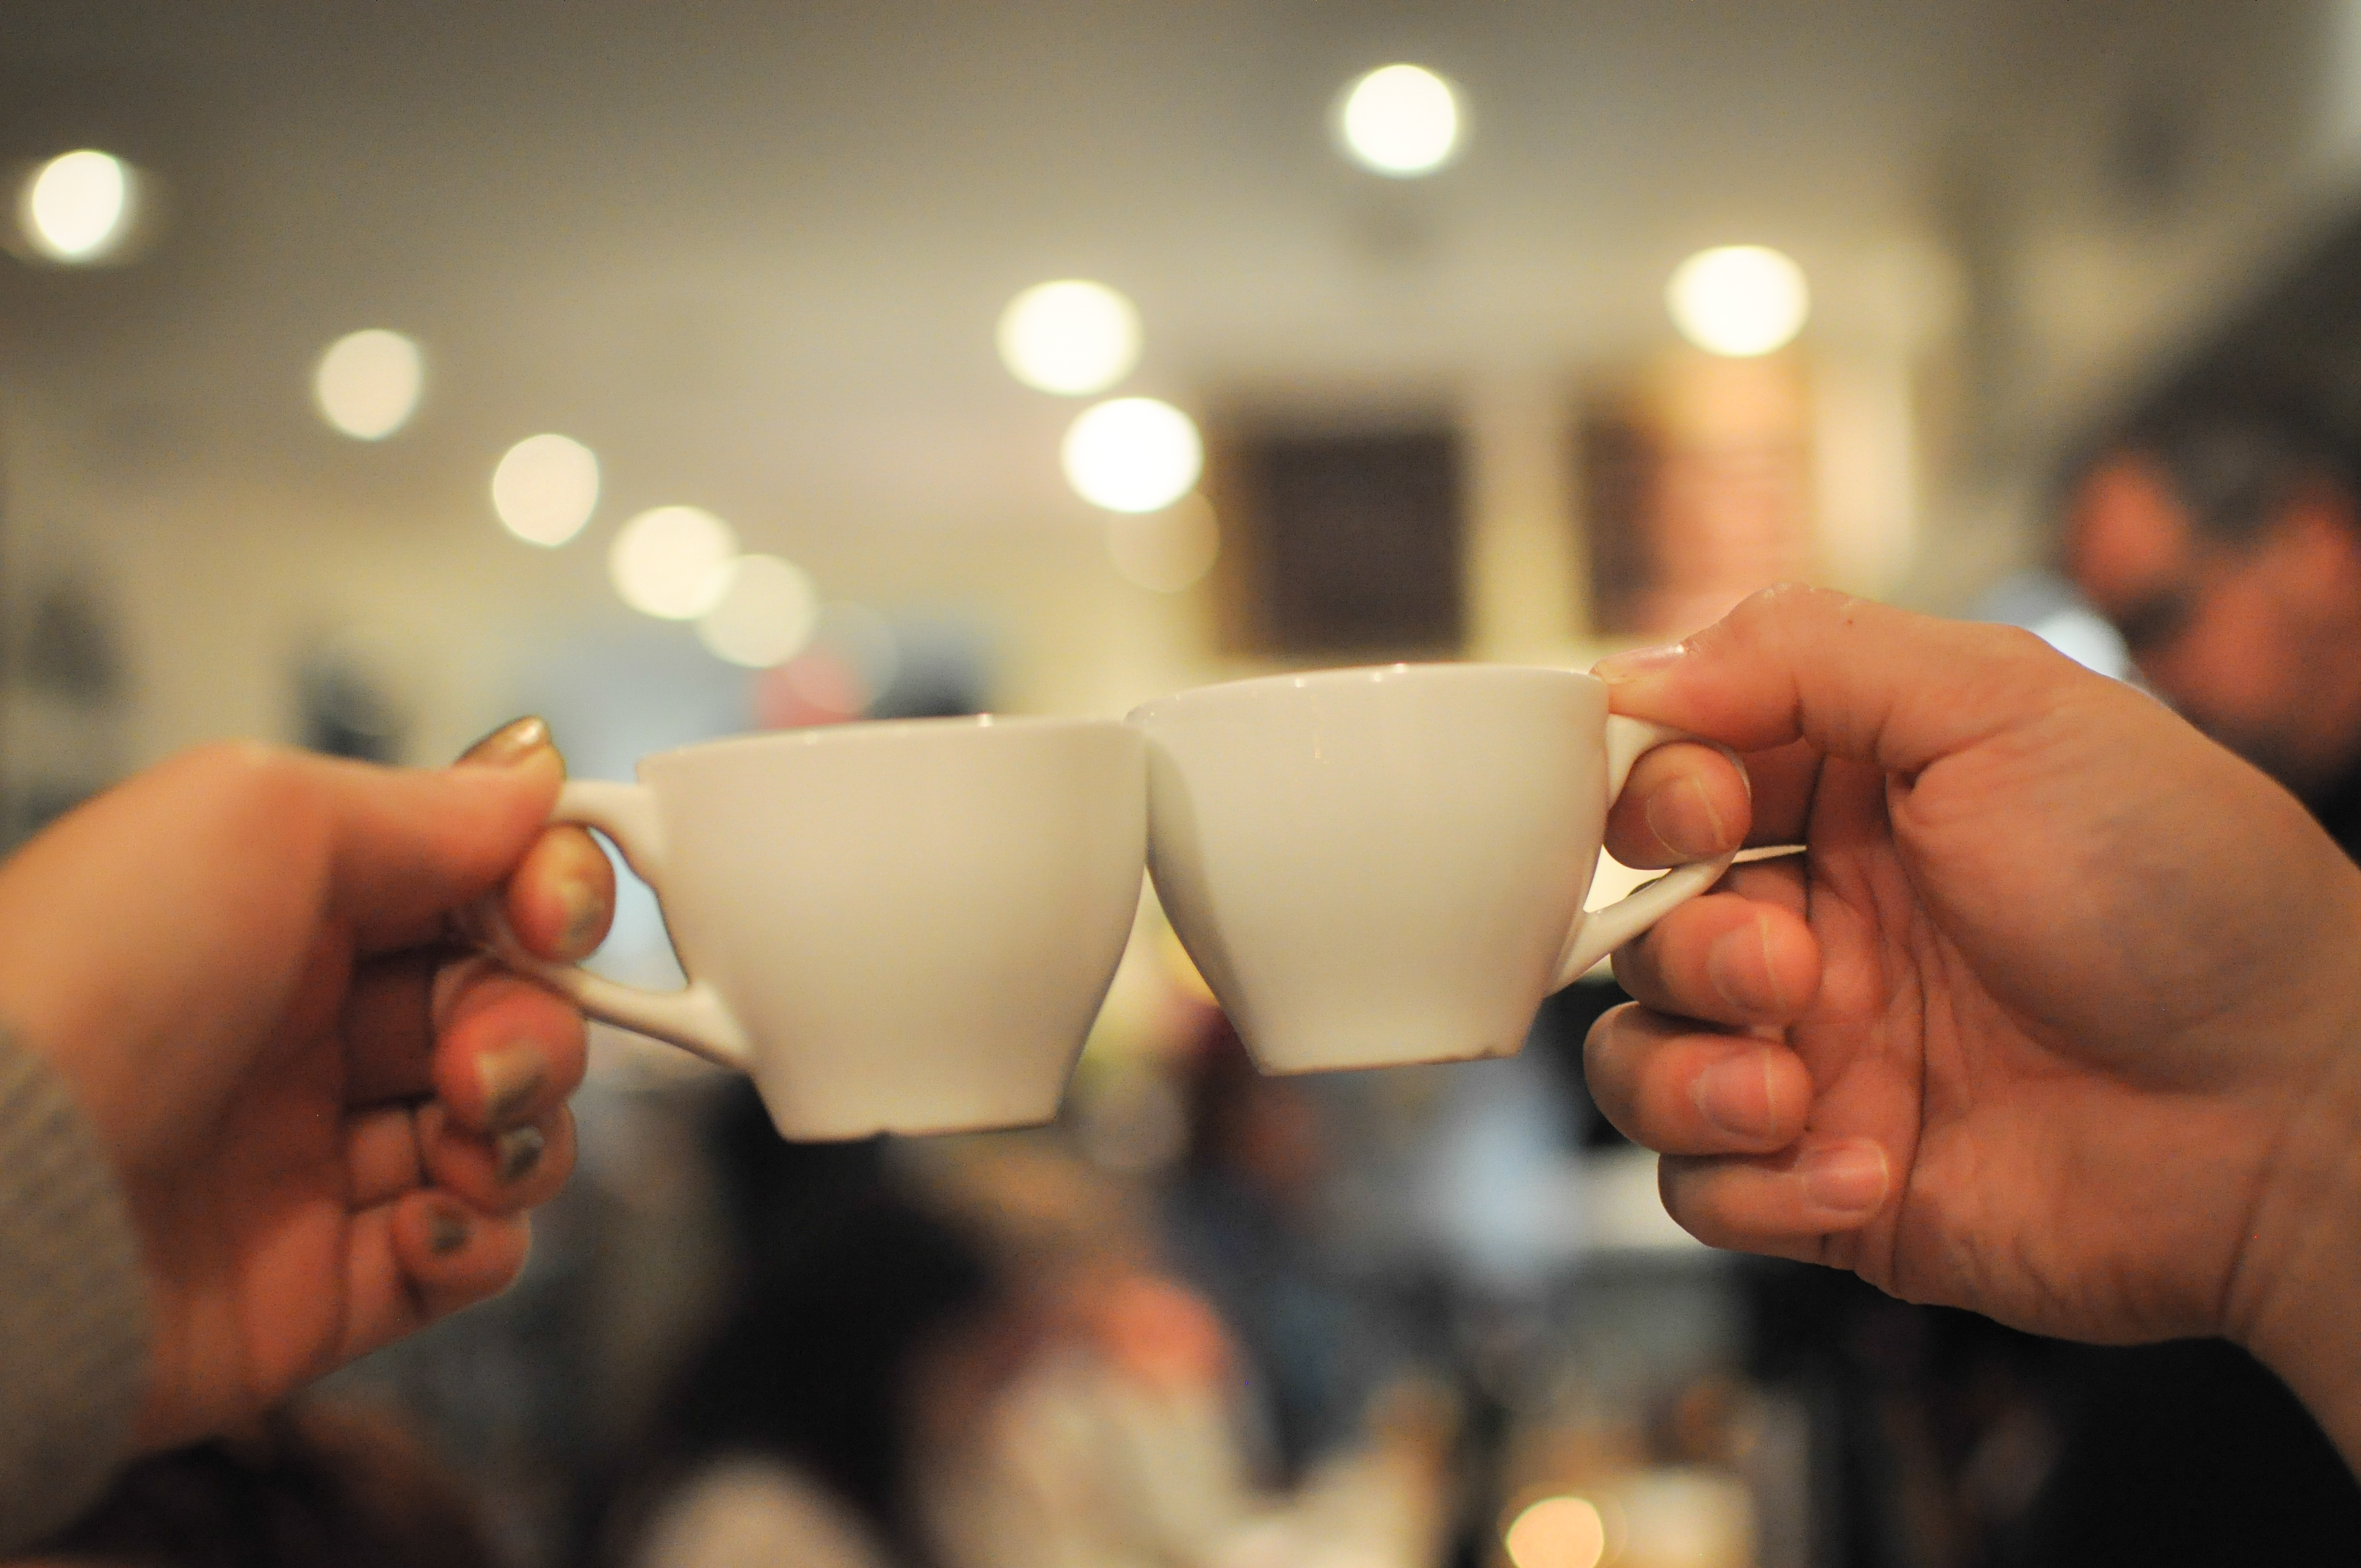 Barnie’s CoffeeKitchen unleashes new menu items – CFL Food Bloggers Meet up